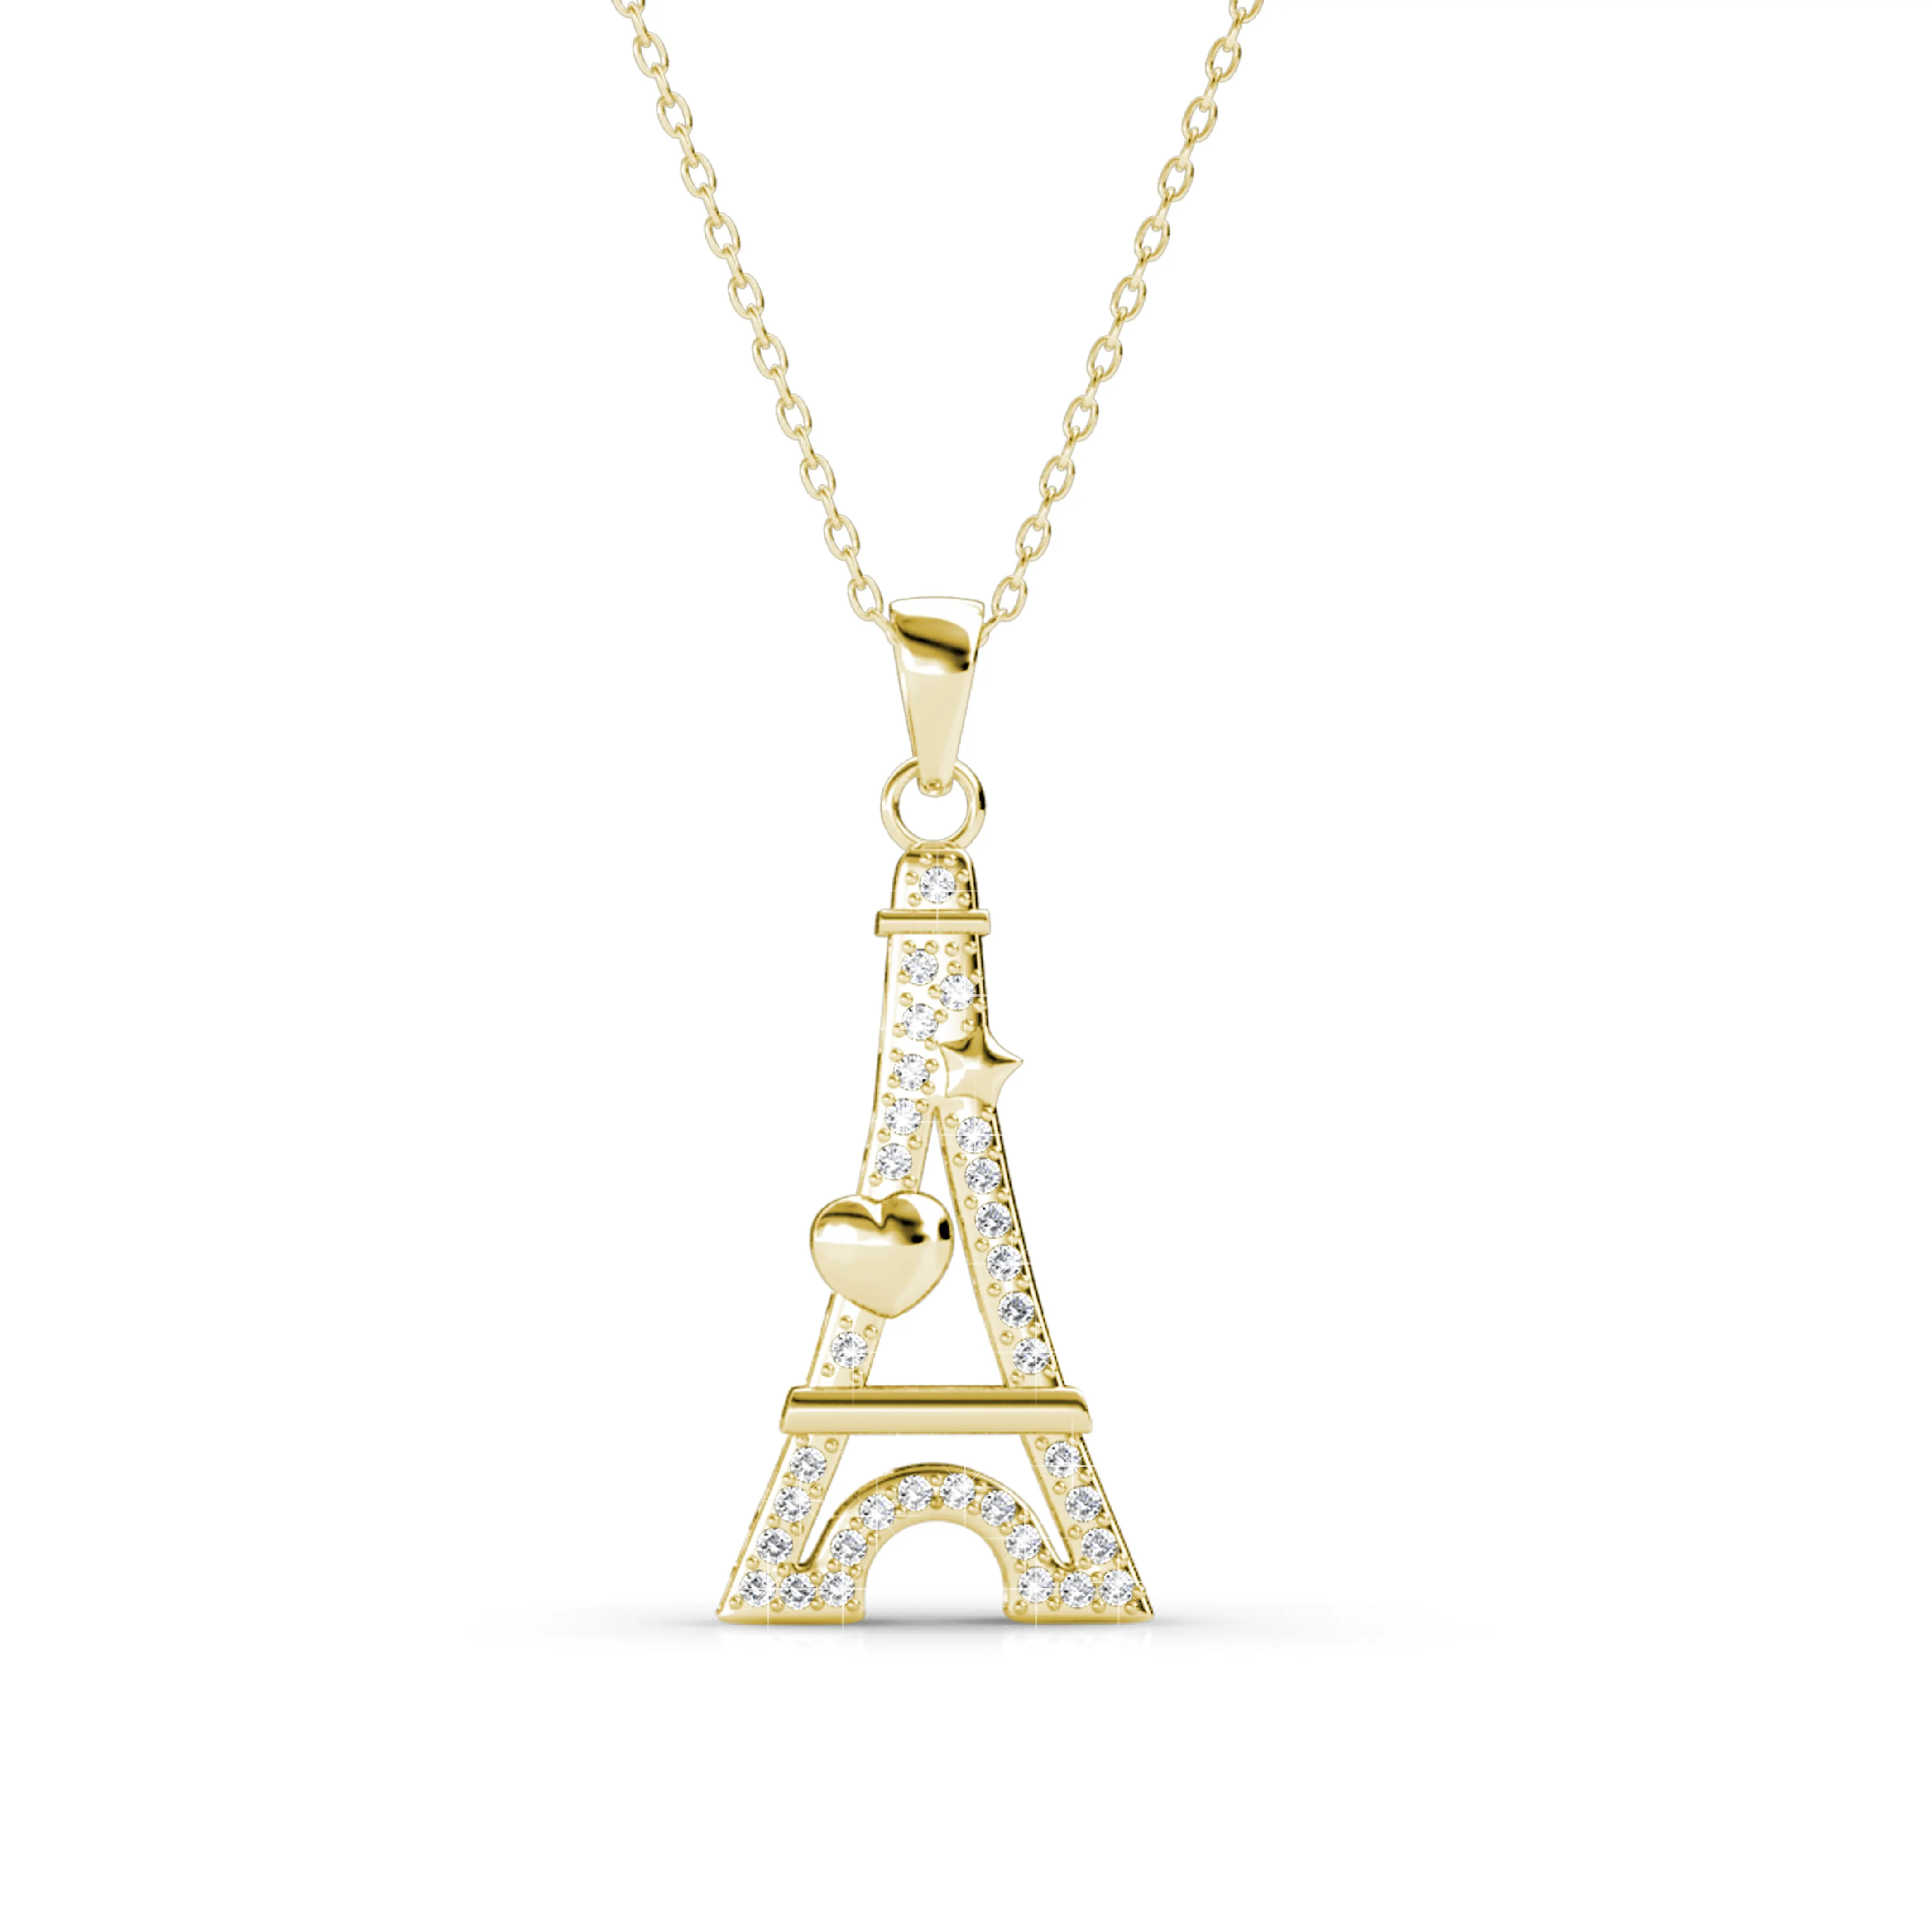 Premium Austrian Crystal Jewelry Sterling Silver Beautiful 18k Gold Plated Paris Love Pendant Necklace Destiny Jewellery